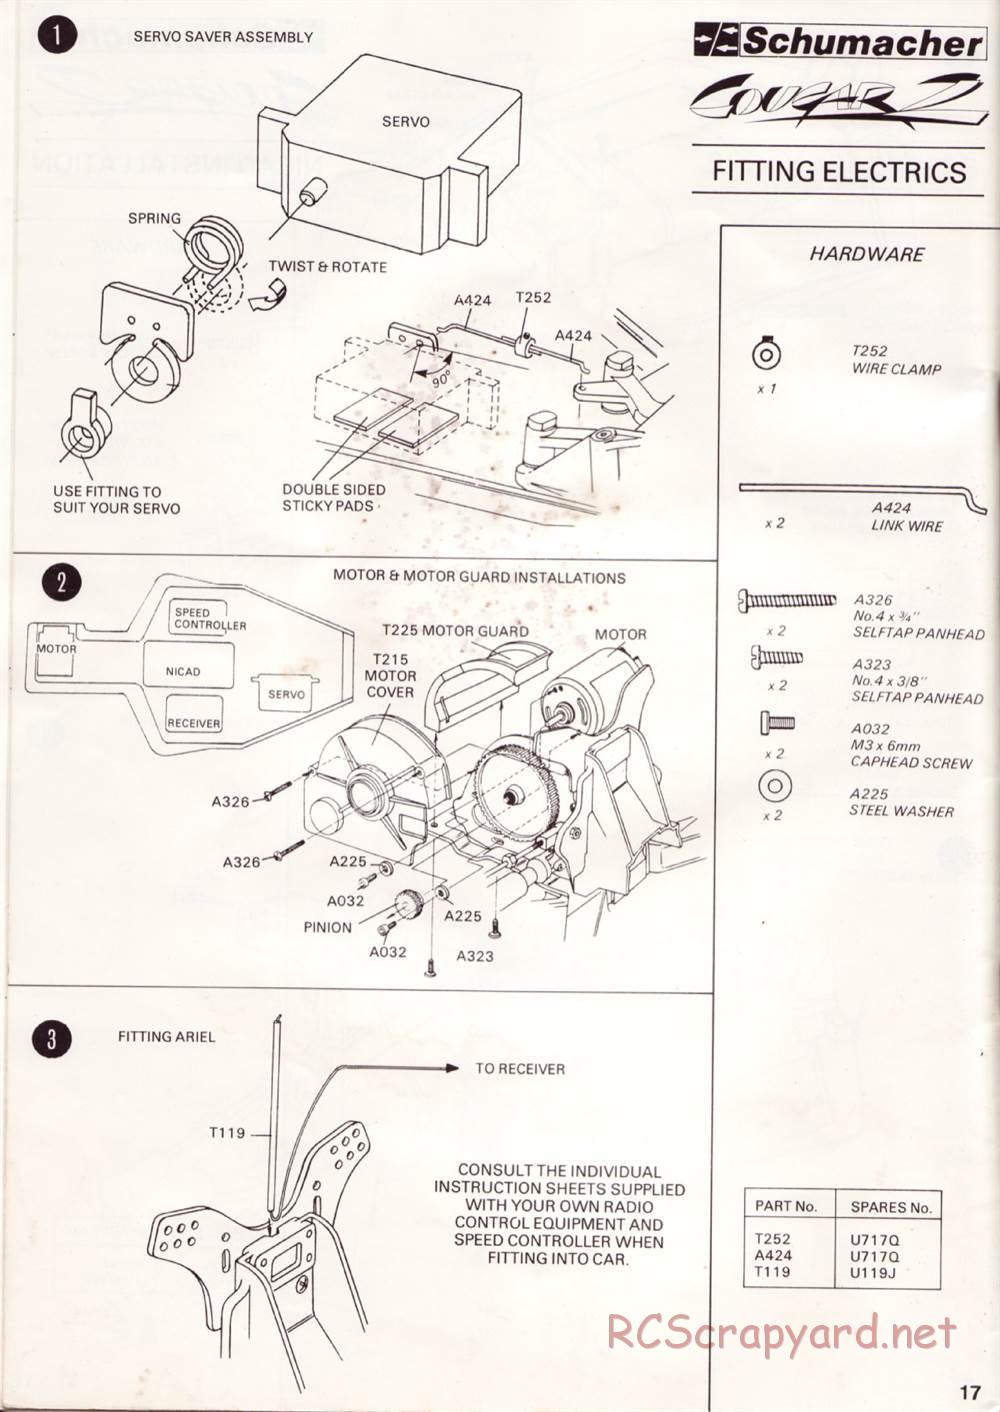 Schumacher - Cougar 2 - Manual - Page 20